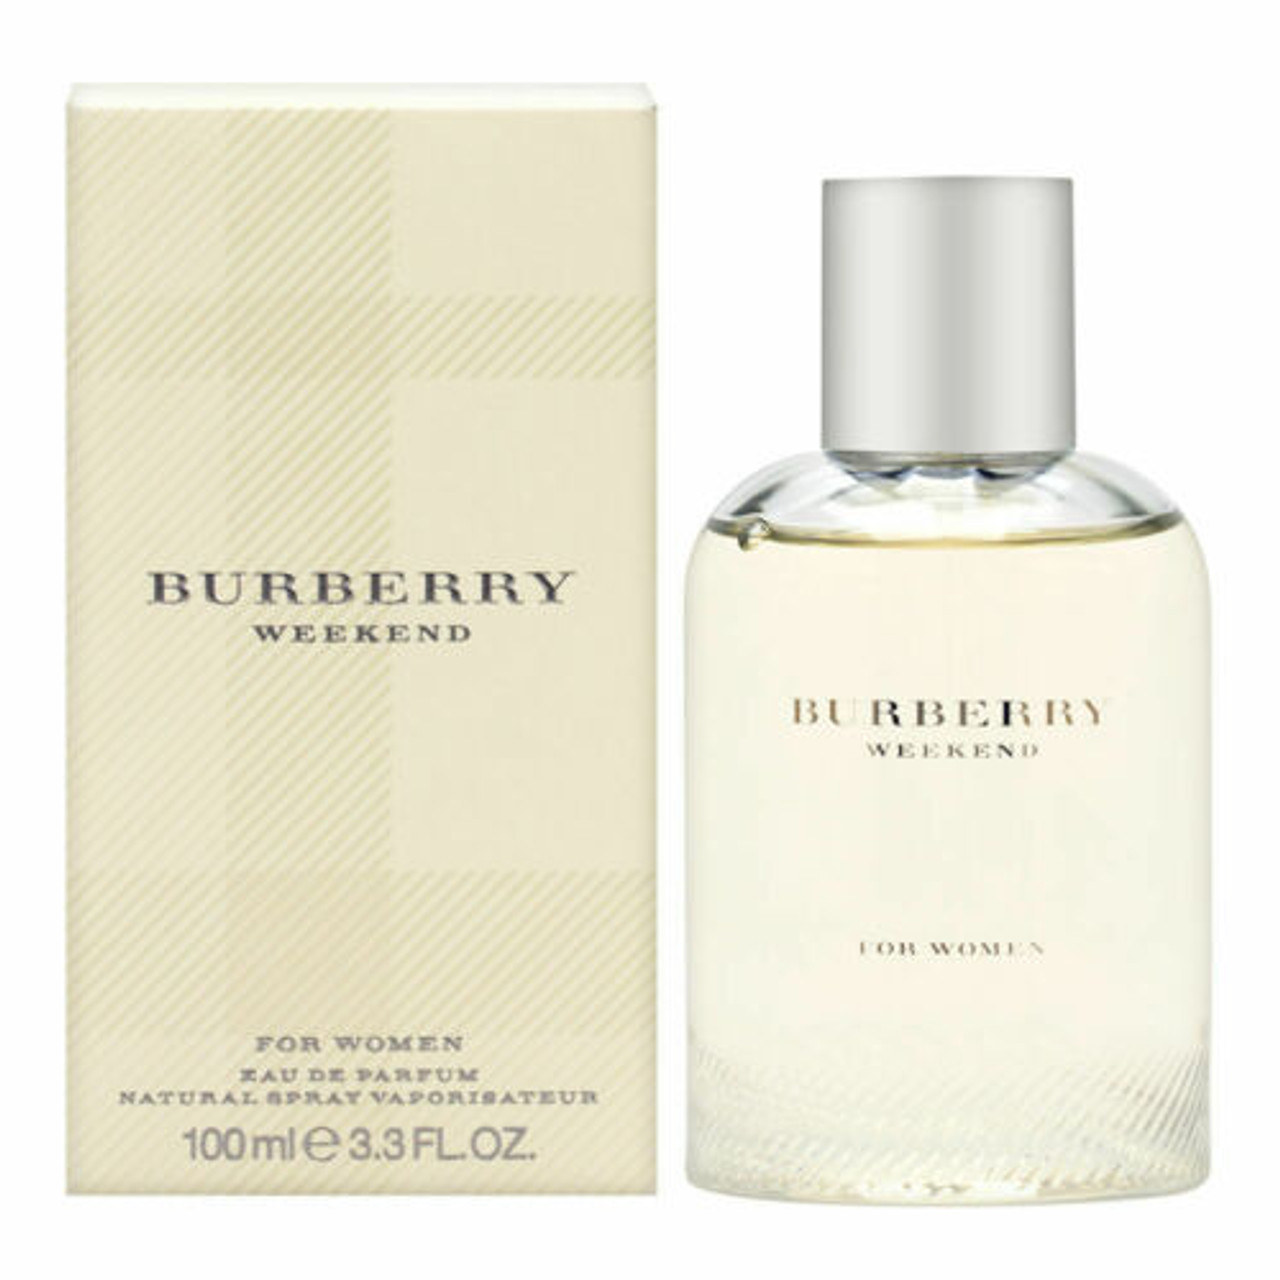 Burberry Weekend 3.4oz Eau De Parfum Spray Women